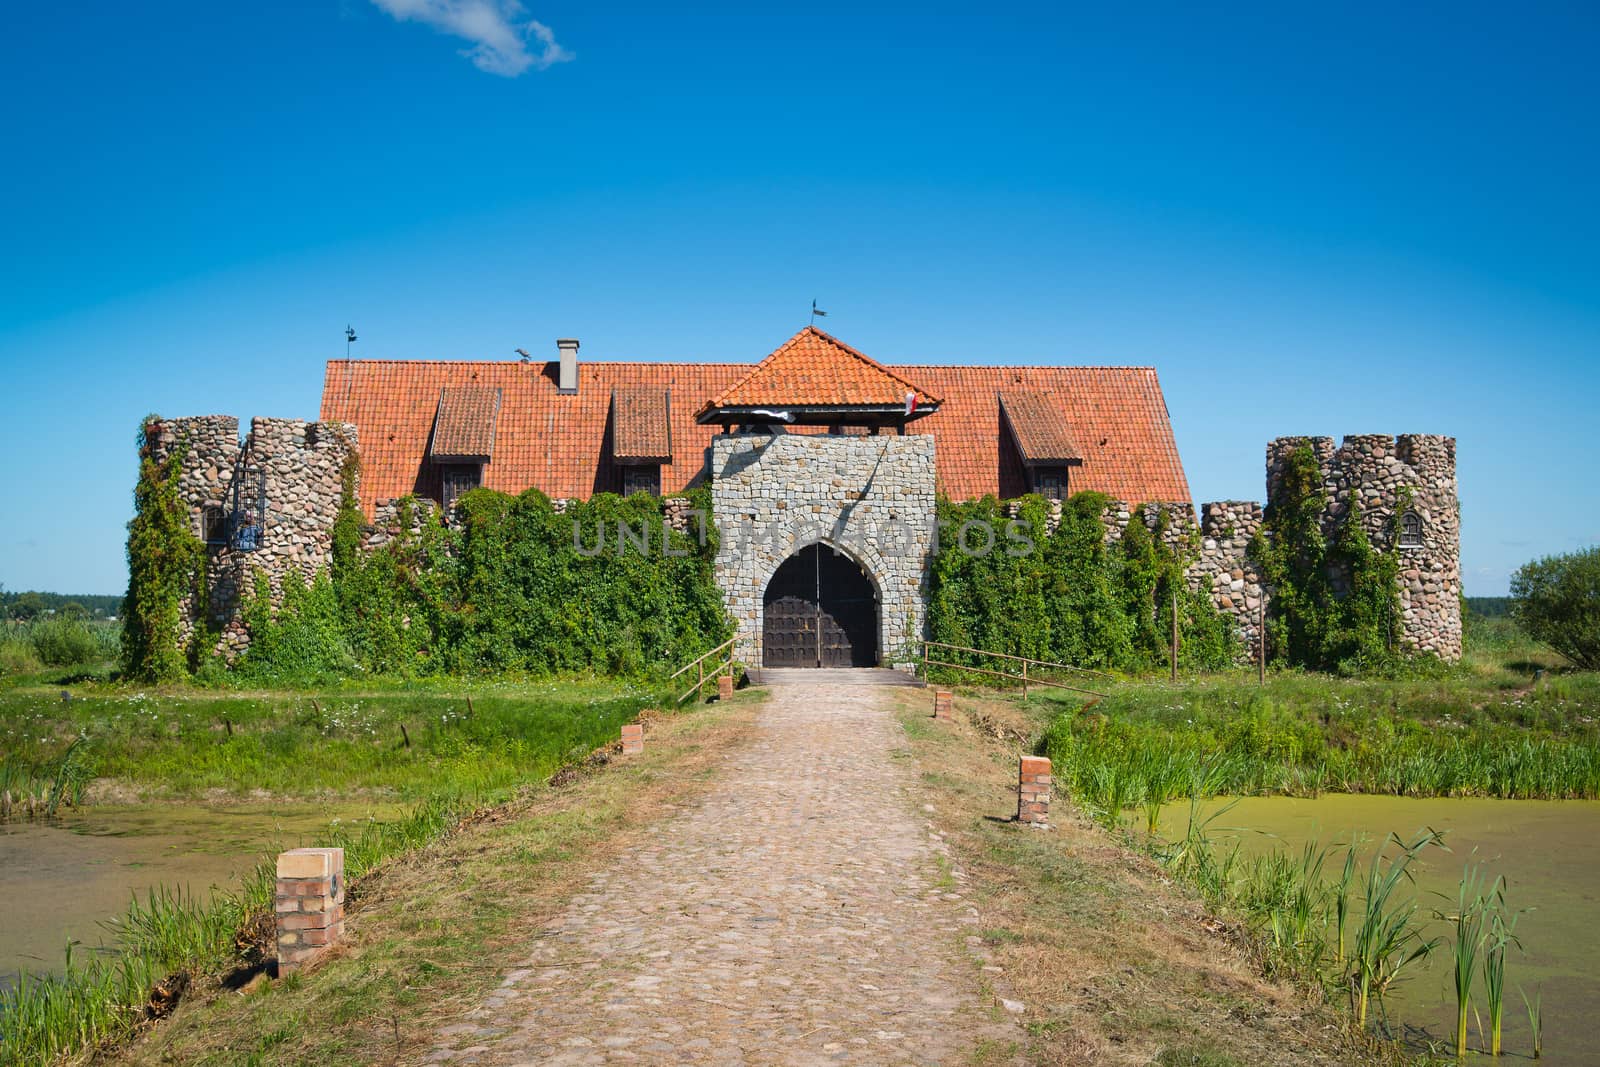 Old castle in Kiermusy - eastern Poland